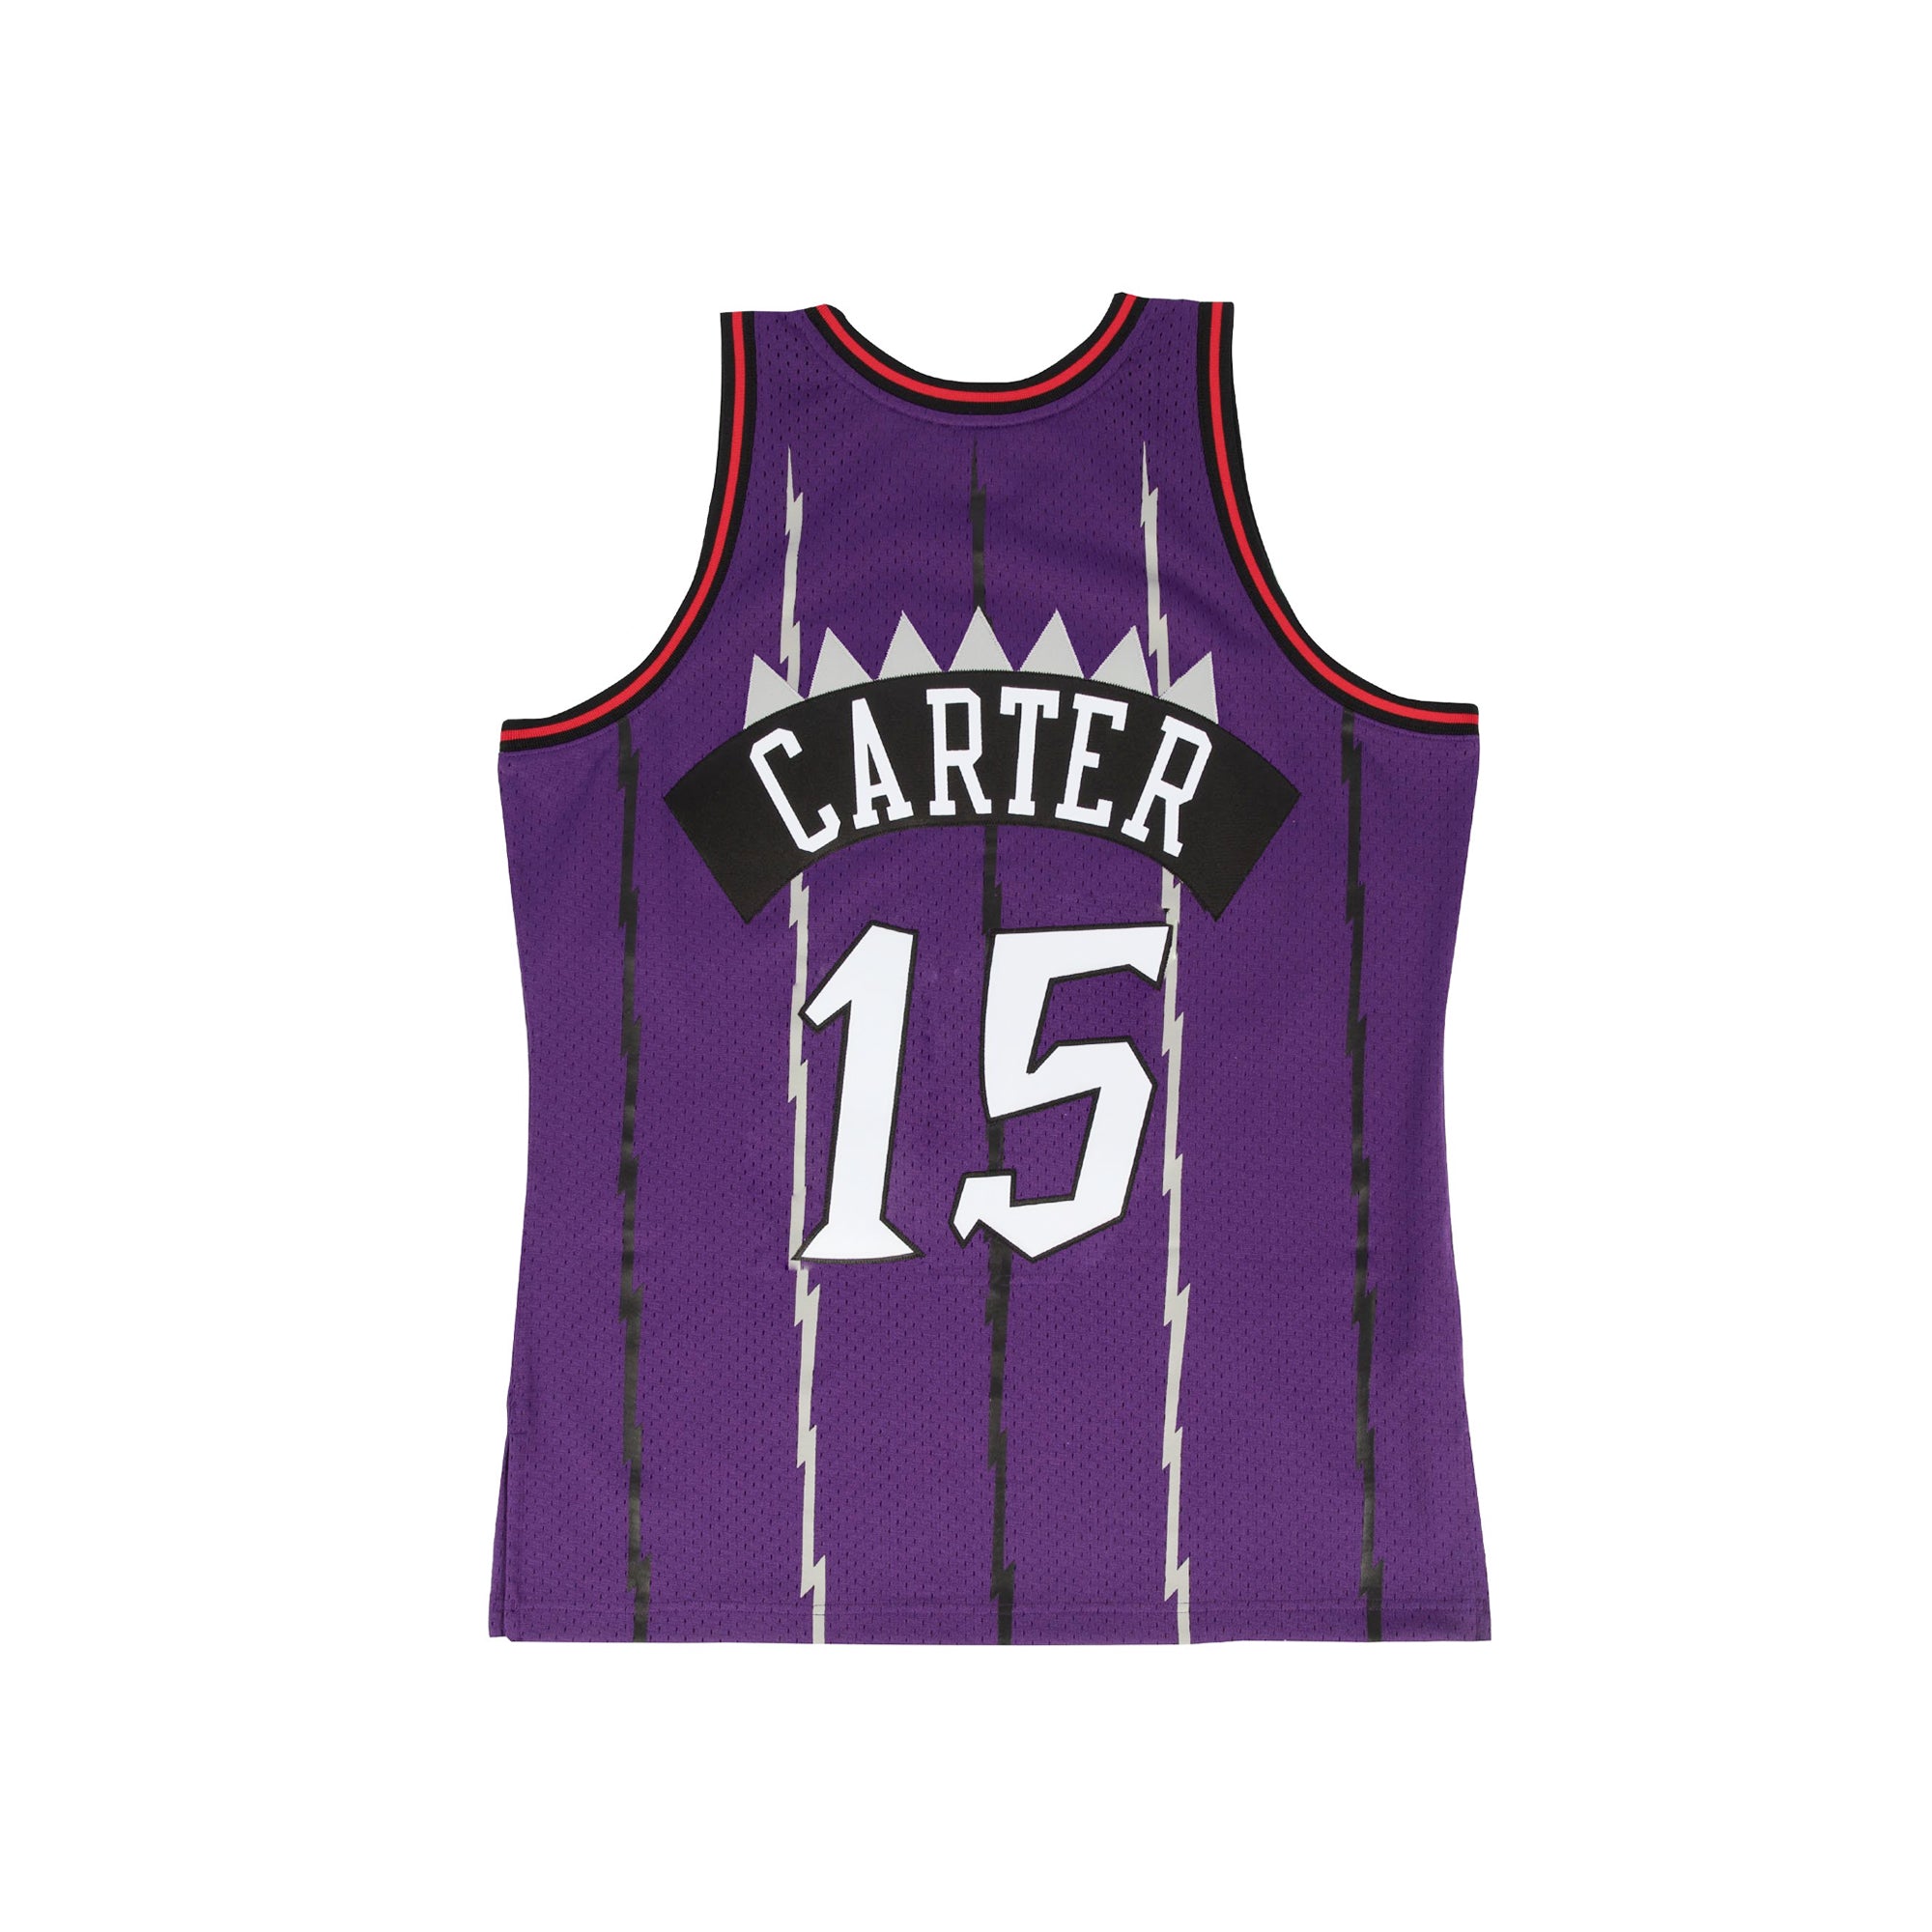 Reebok Toronto Raptors Vince carter jersey youth Sz M vintage nba away  purple